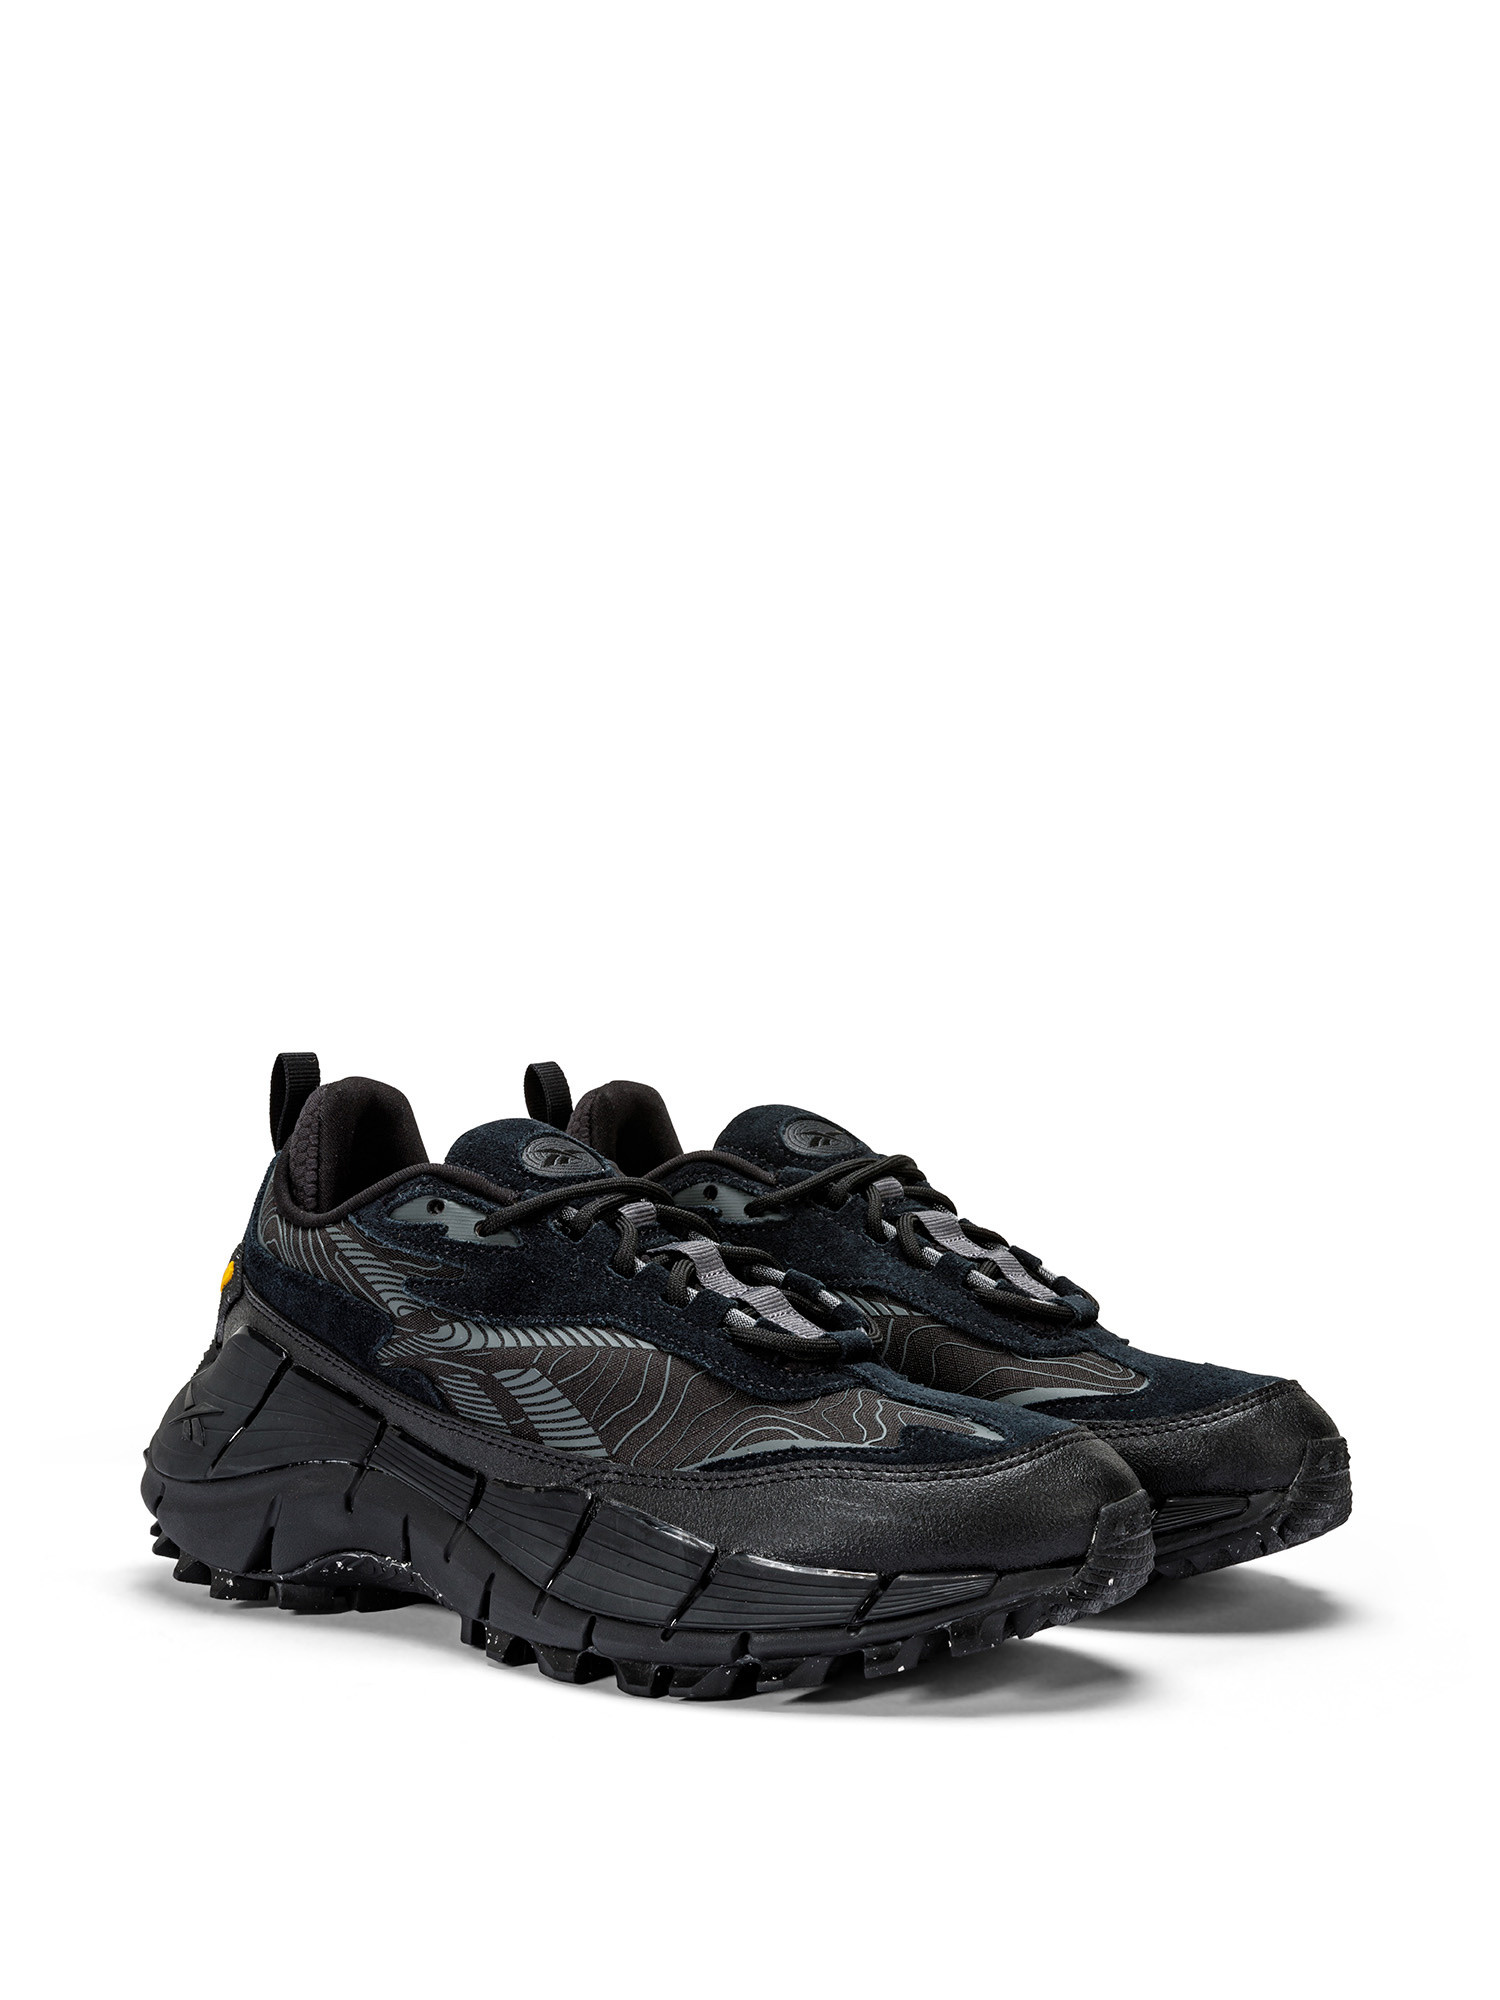 Reebok - Zig Kinetica 2.5 Edge Shoes, Black, large image number 1